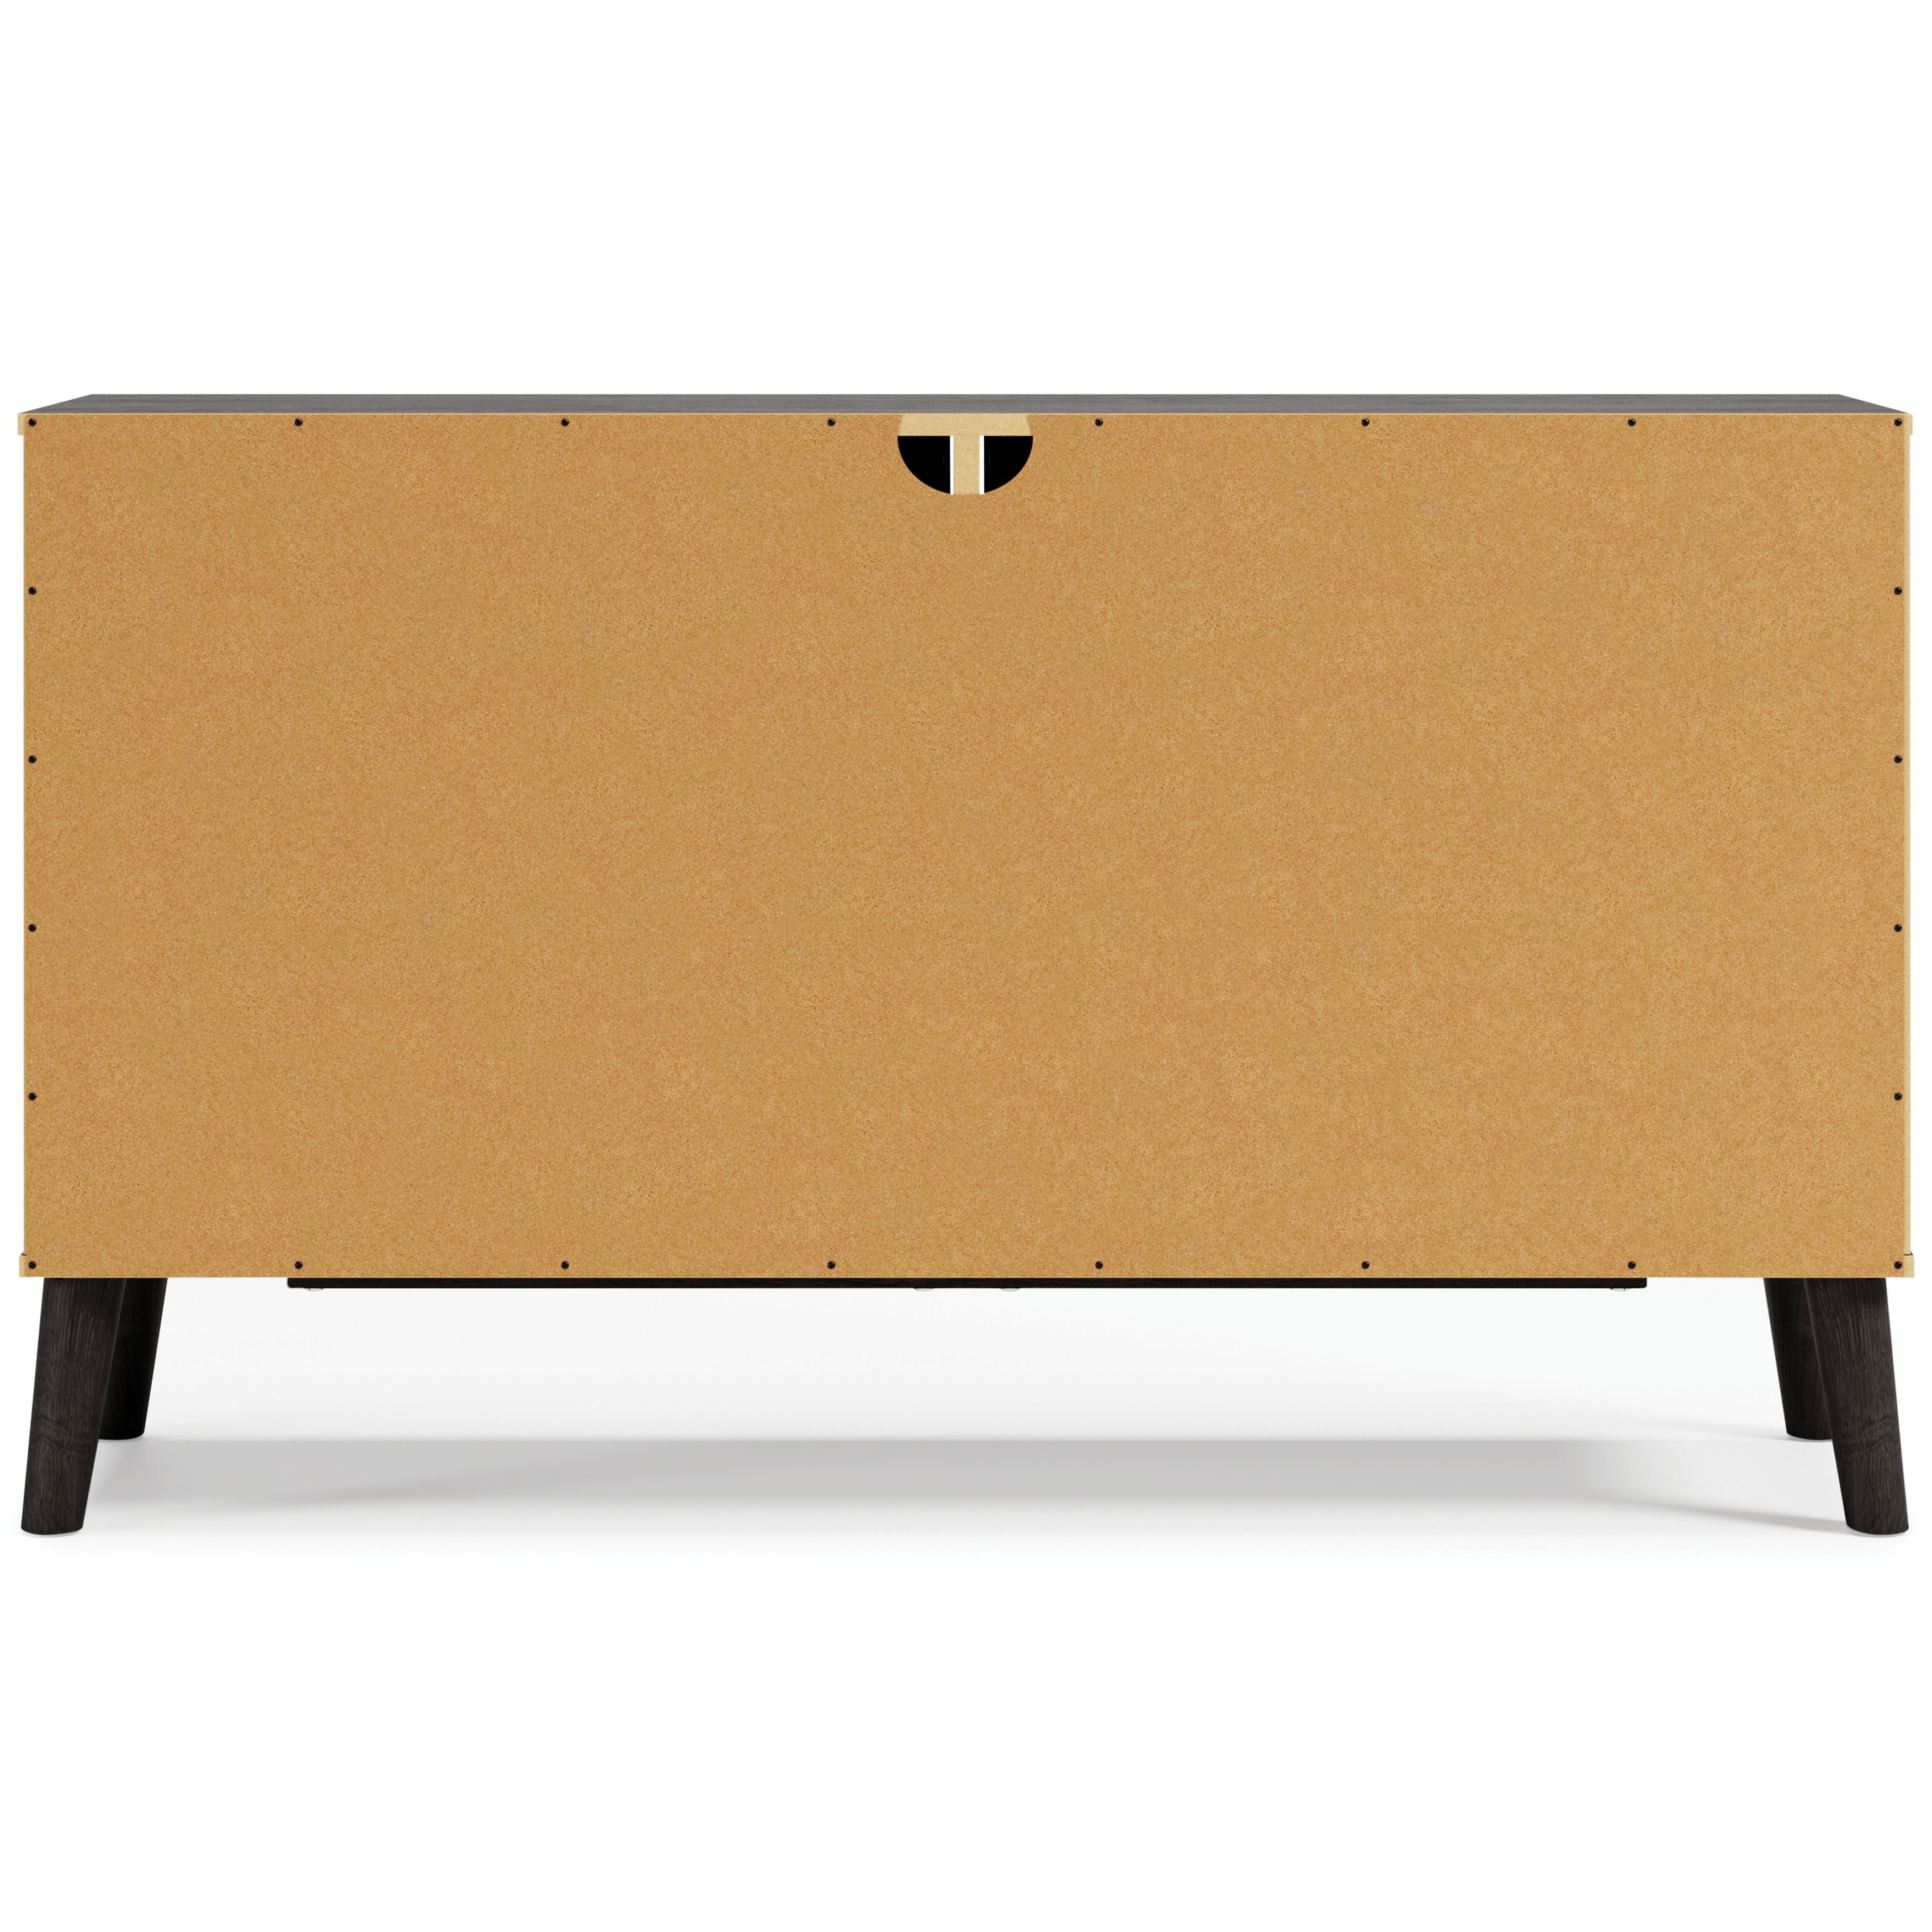 Piperton - Drawer Dresser